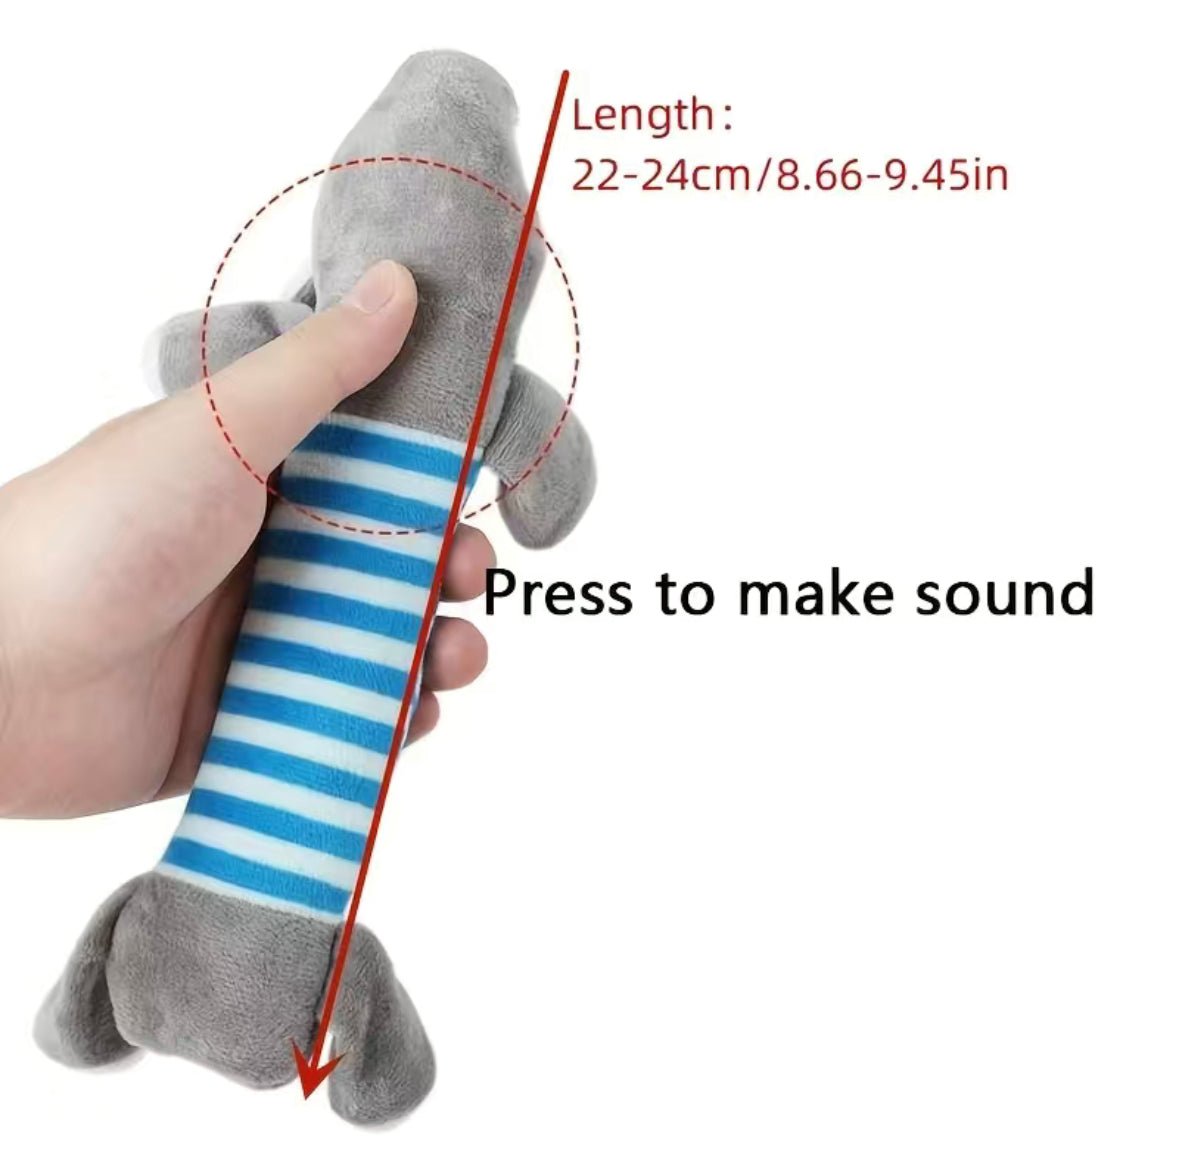 Squeaky Animal Shaped Plush Chew Toy - 4 Legs R Us